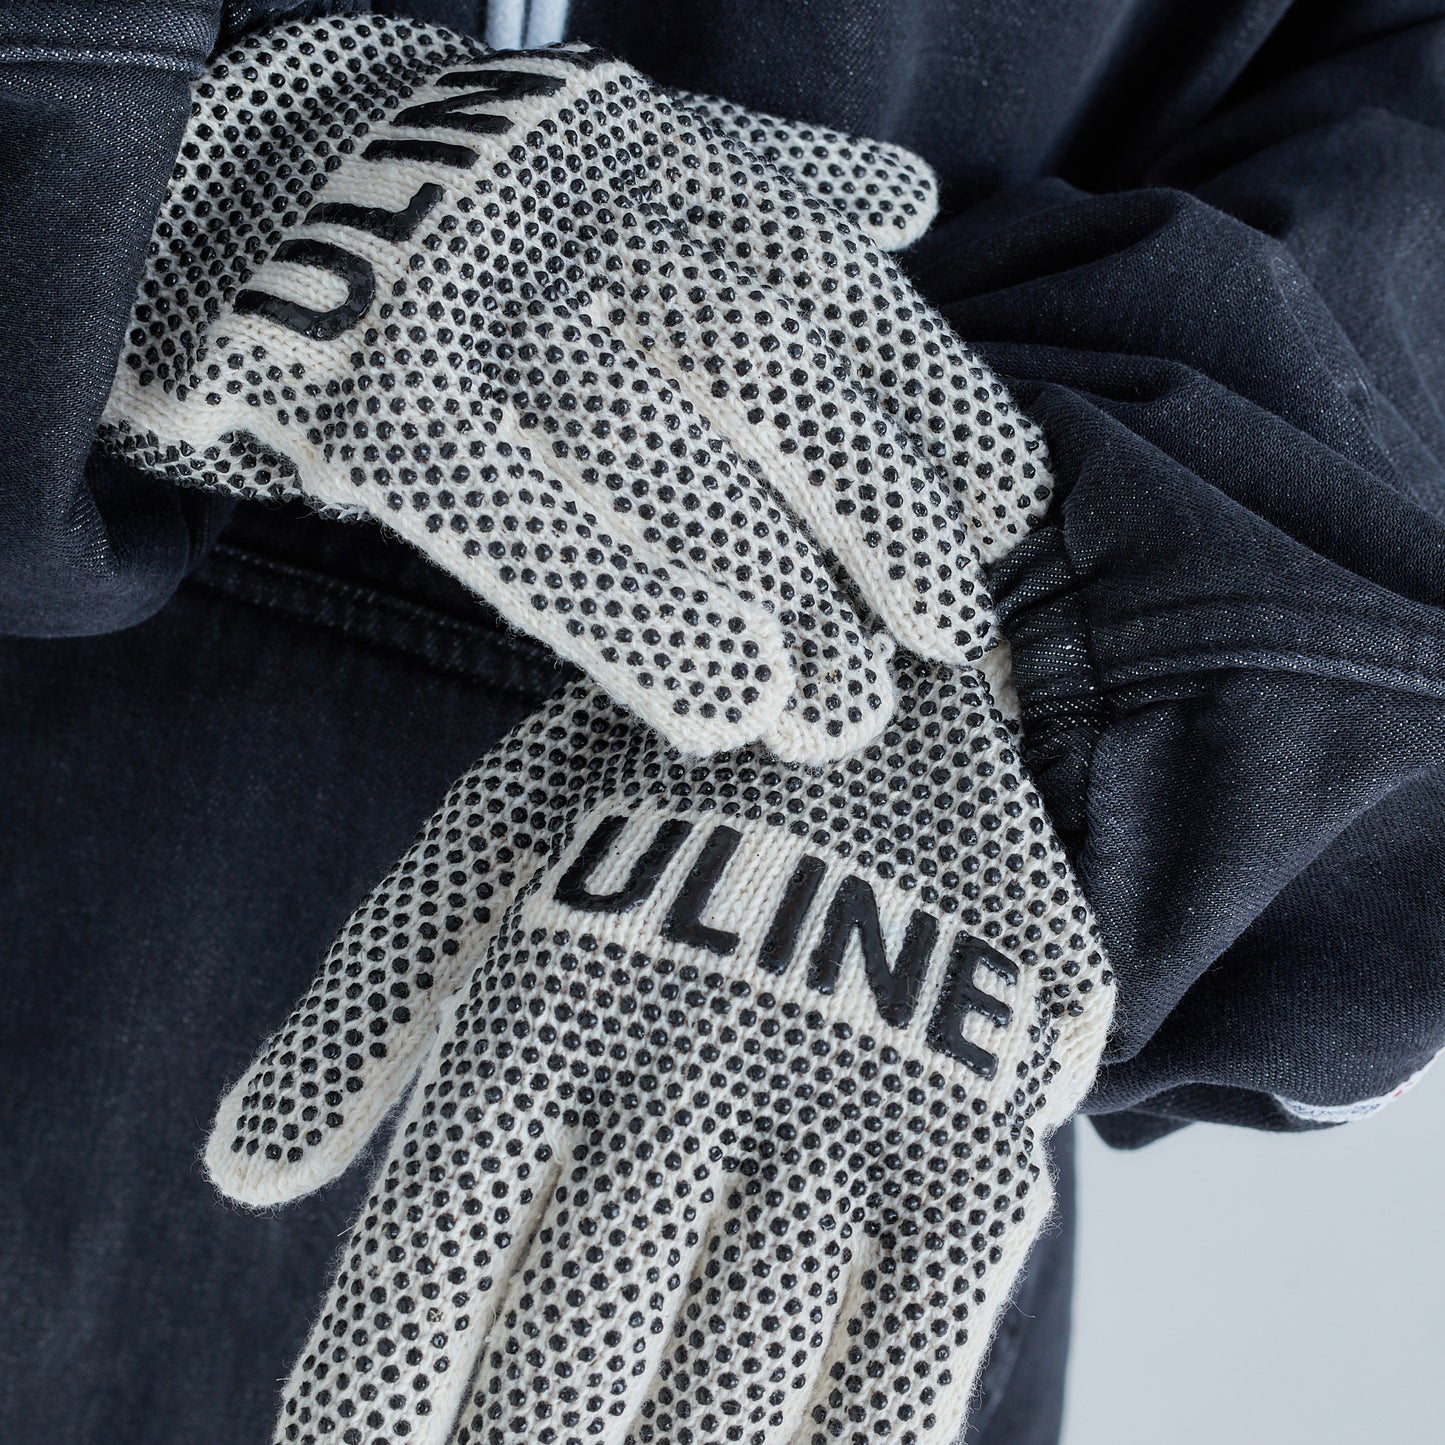 ULINE work glove